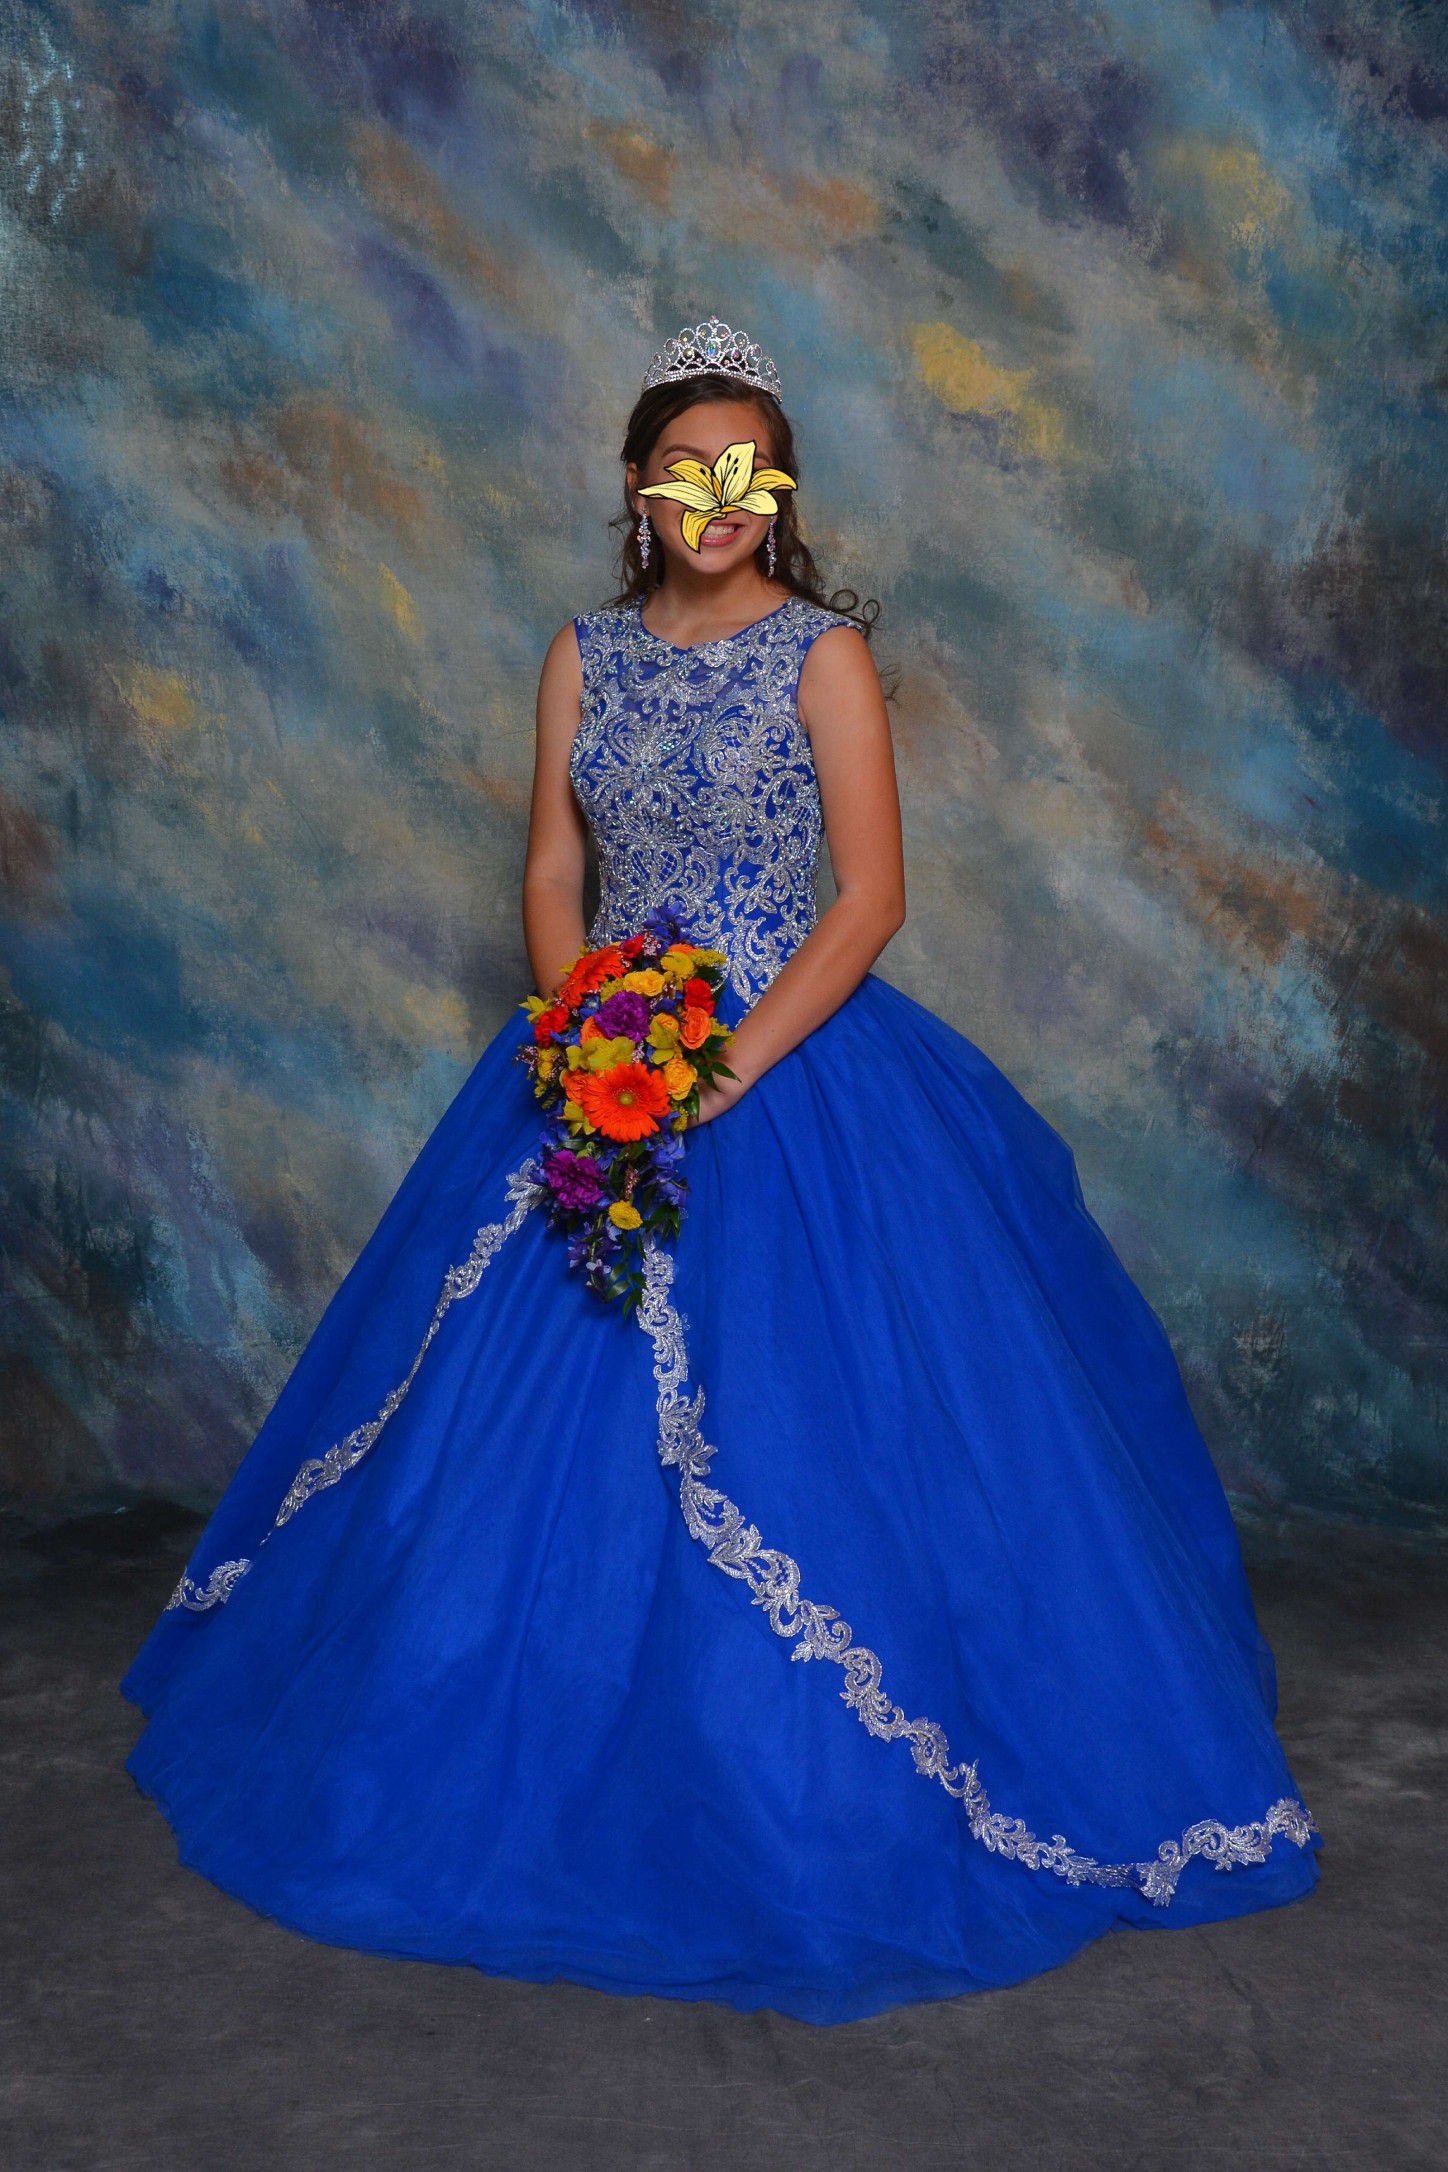 Sz. 6 Royal Blue Quinceanera Dress